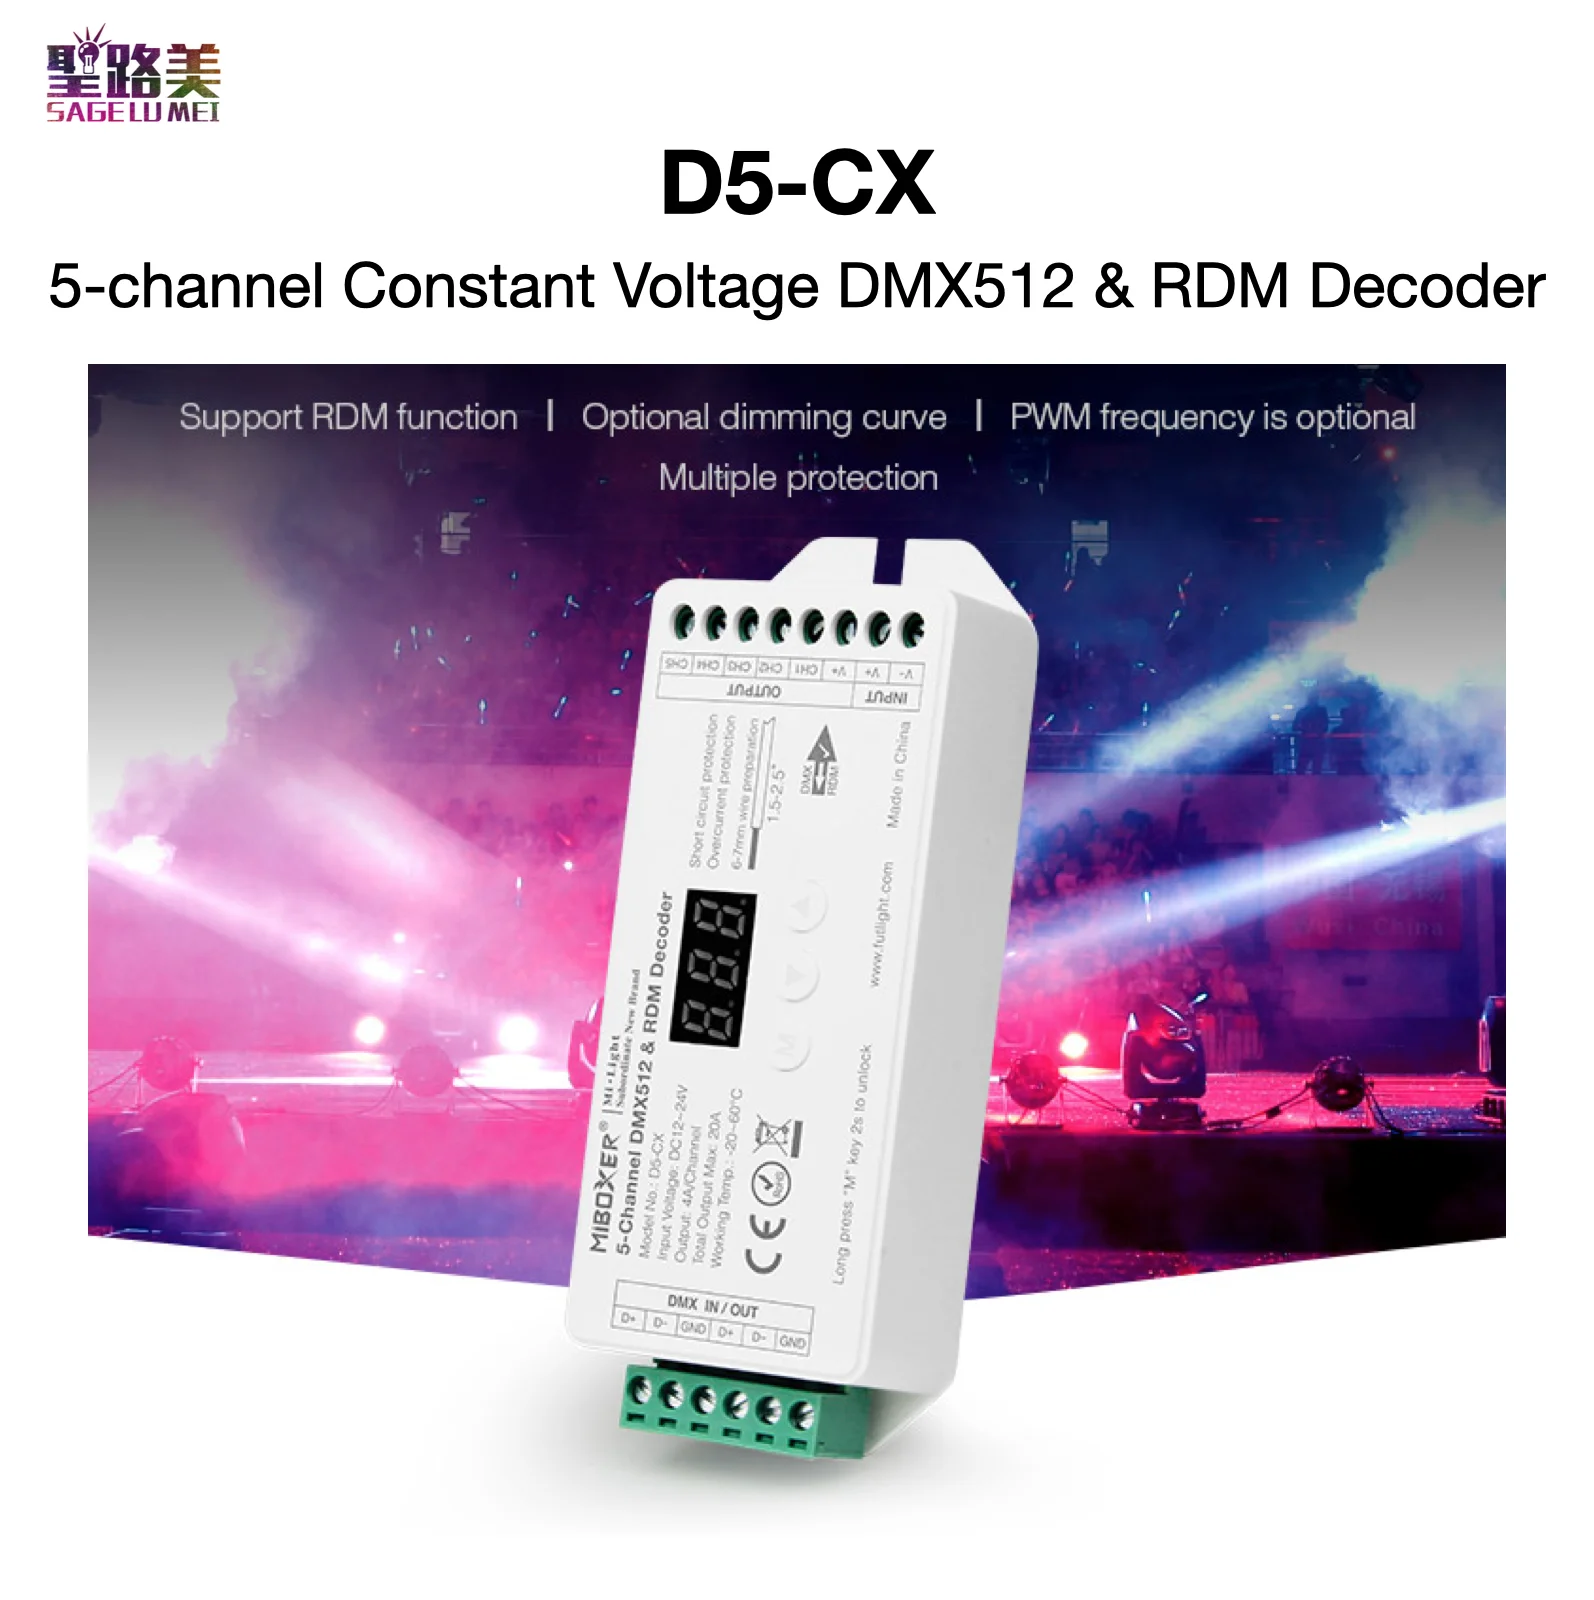 Mi-Light D1-CX 1channel D2-CX 2channel D3-CX 3channel D4-CX 4channel D5-CX 5channel Constant Voltage DMX512 & RDM Decoder images - 6